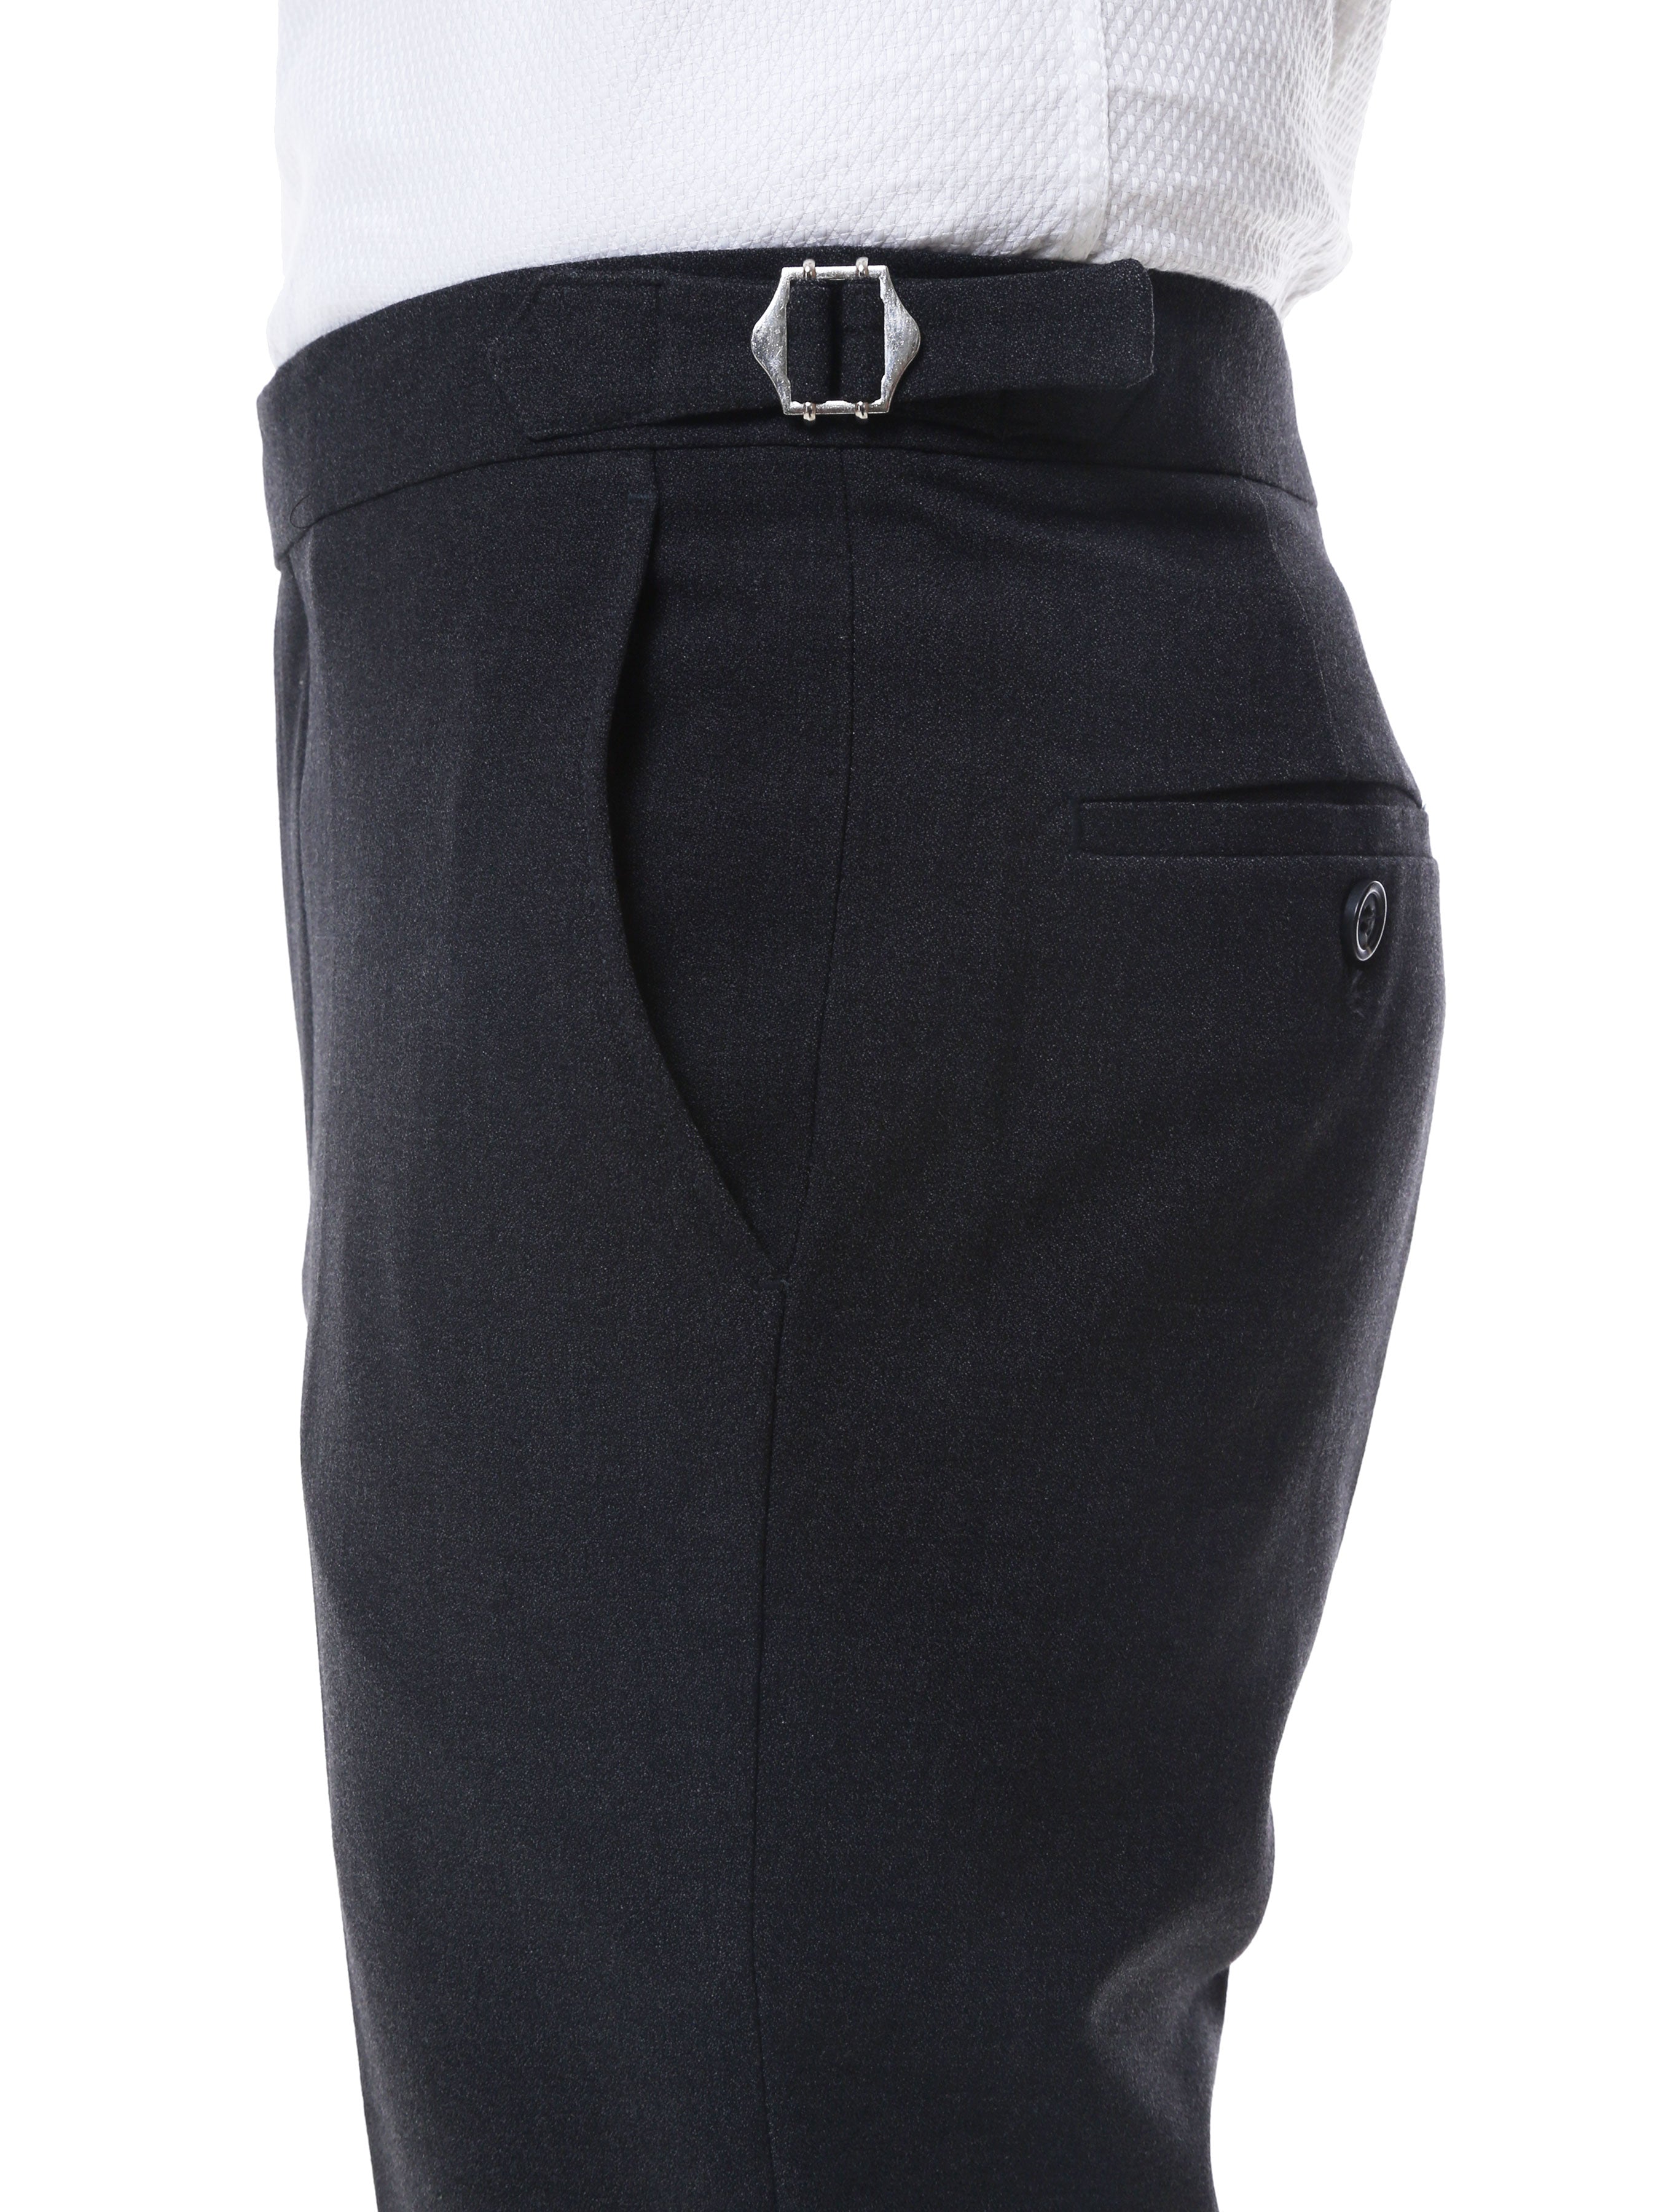 Senior Boys Regular Fit School Trousers with Internal Waist Adjuster   Victoria 2 Schoolwear